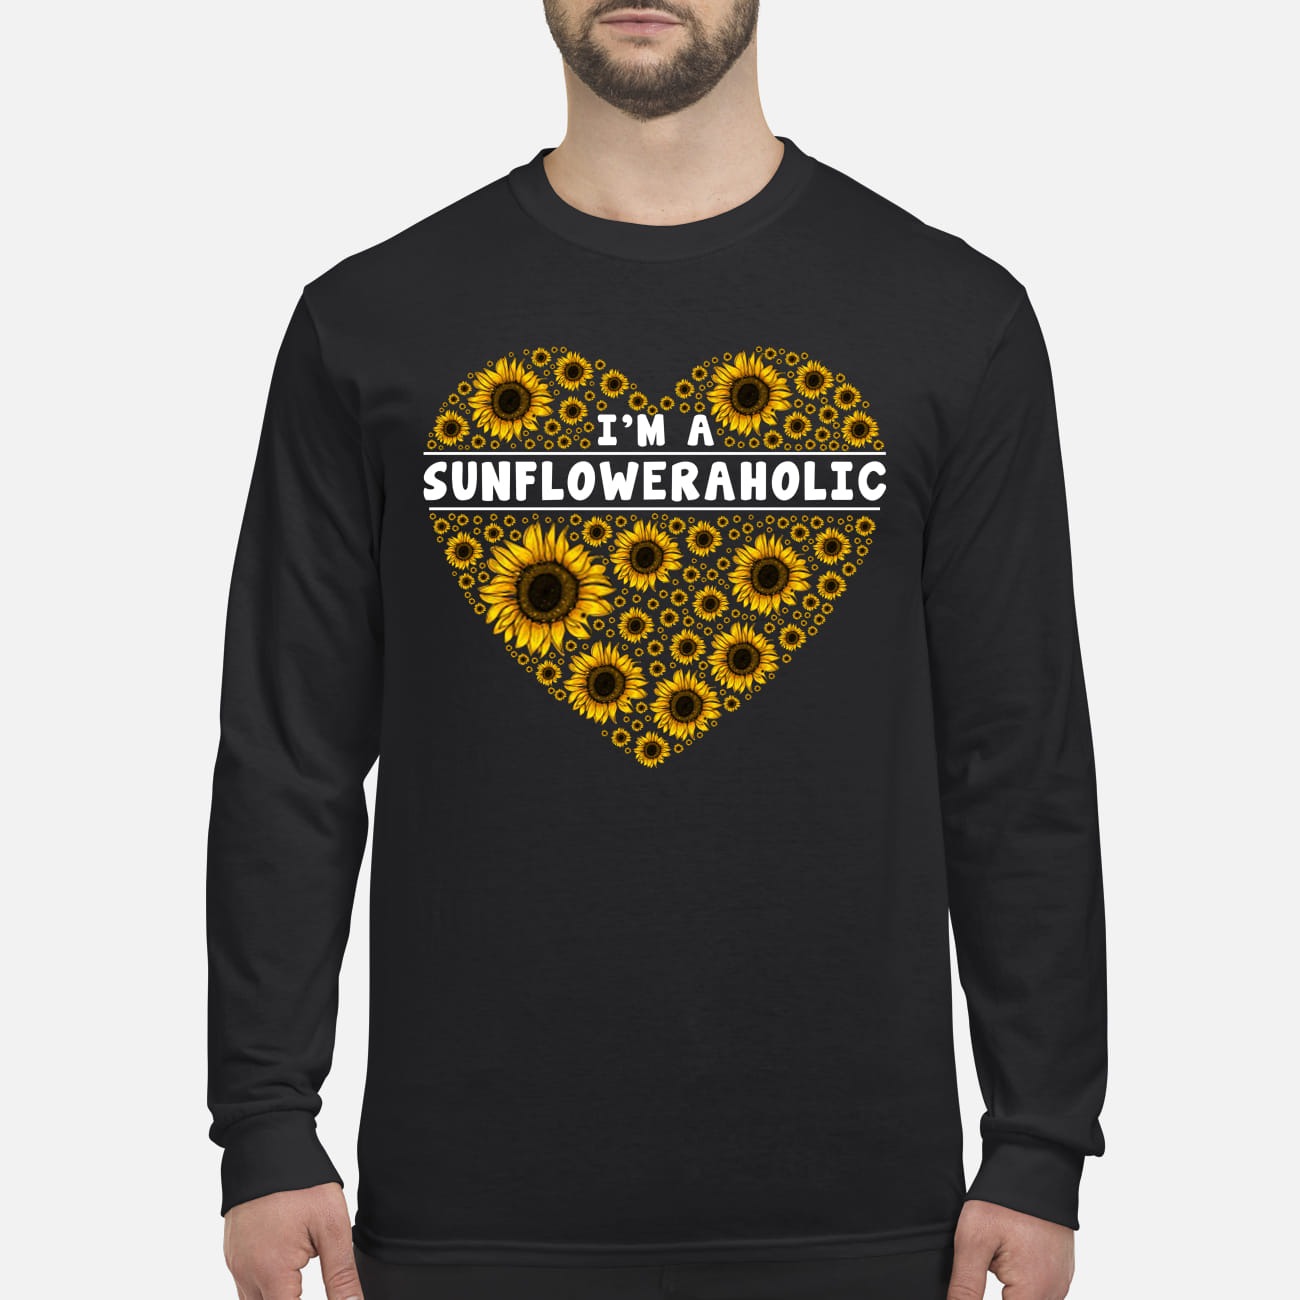 I'm a sunfloweraholic men's long sleeved shirt